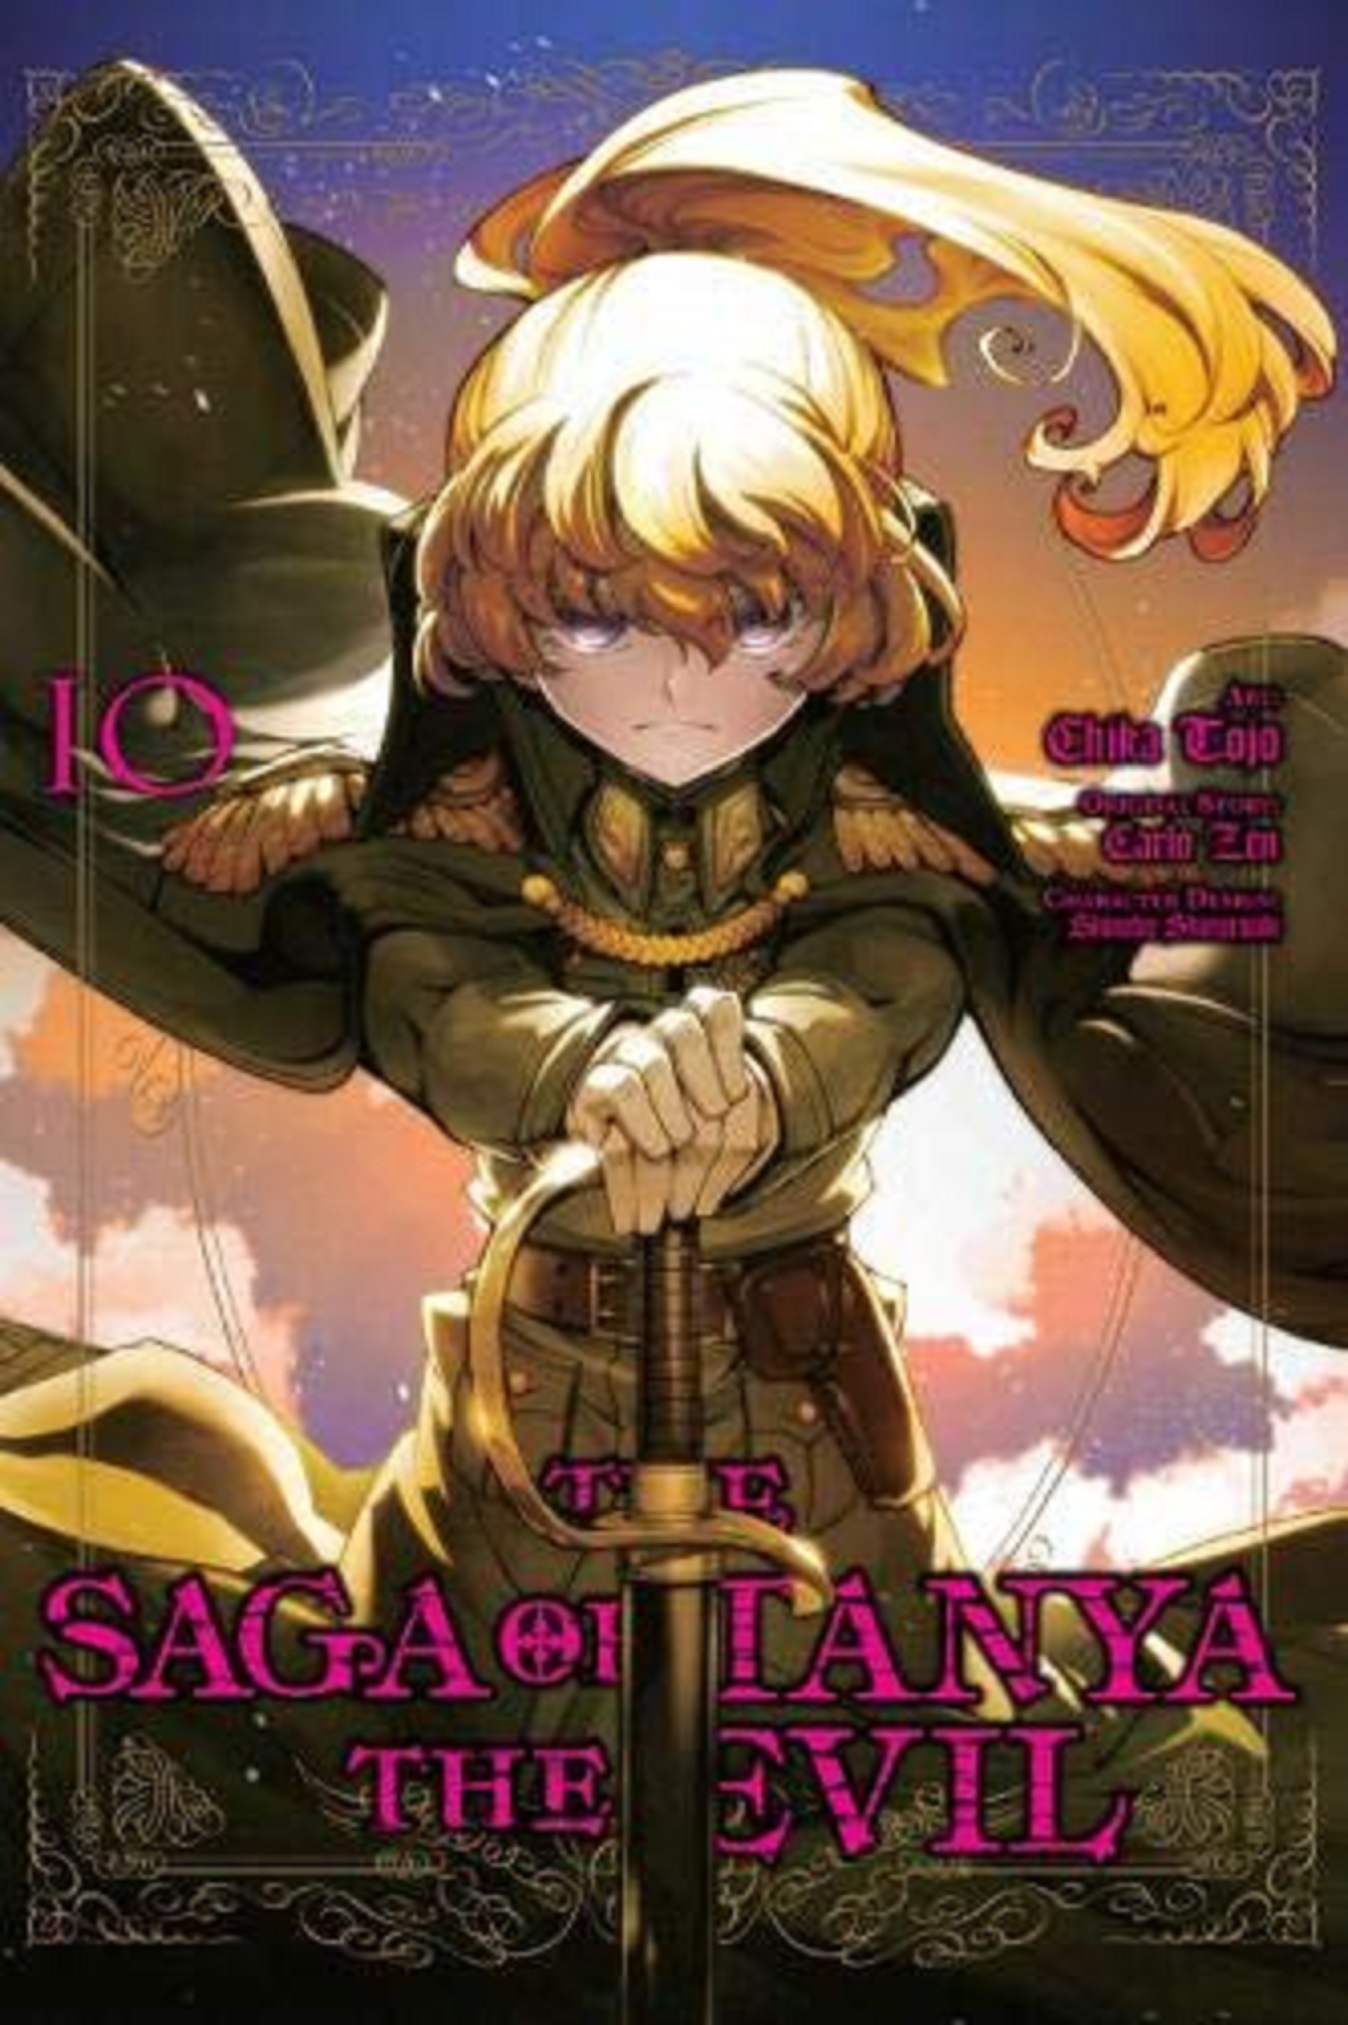 The Saga of Tanya the Evil - Volume 10